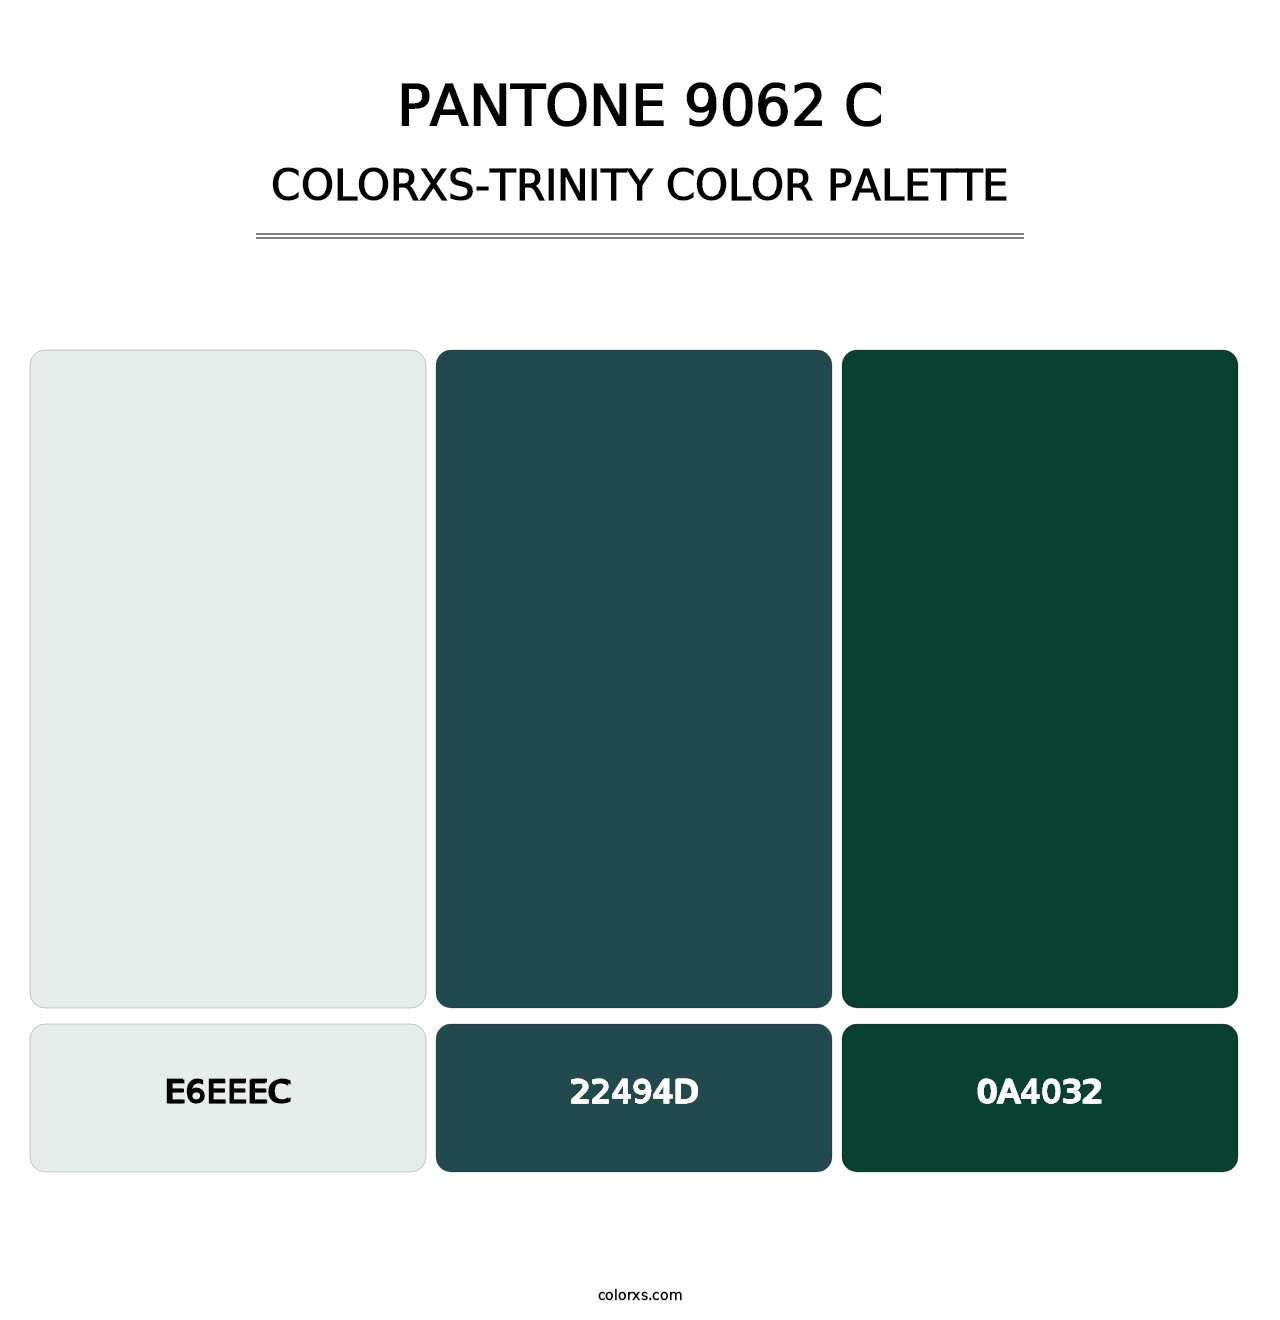 PANTONE 9062 C - Colorxs Trinity Palette